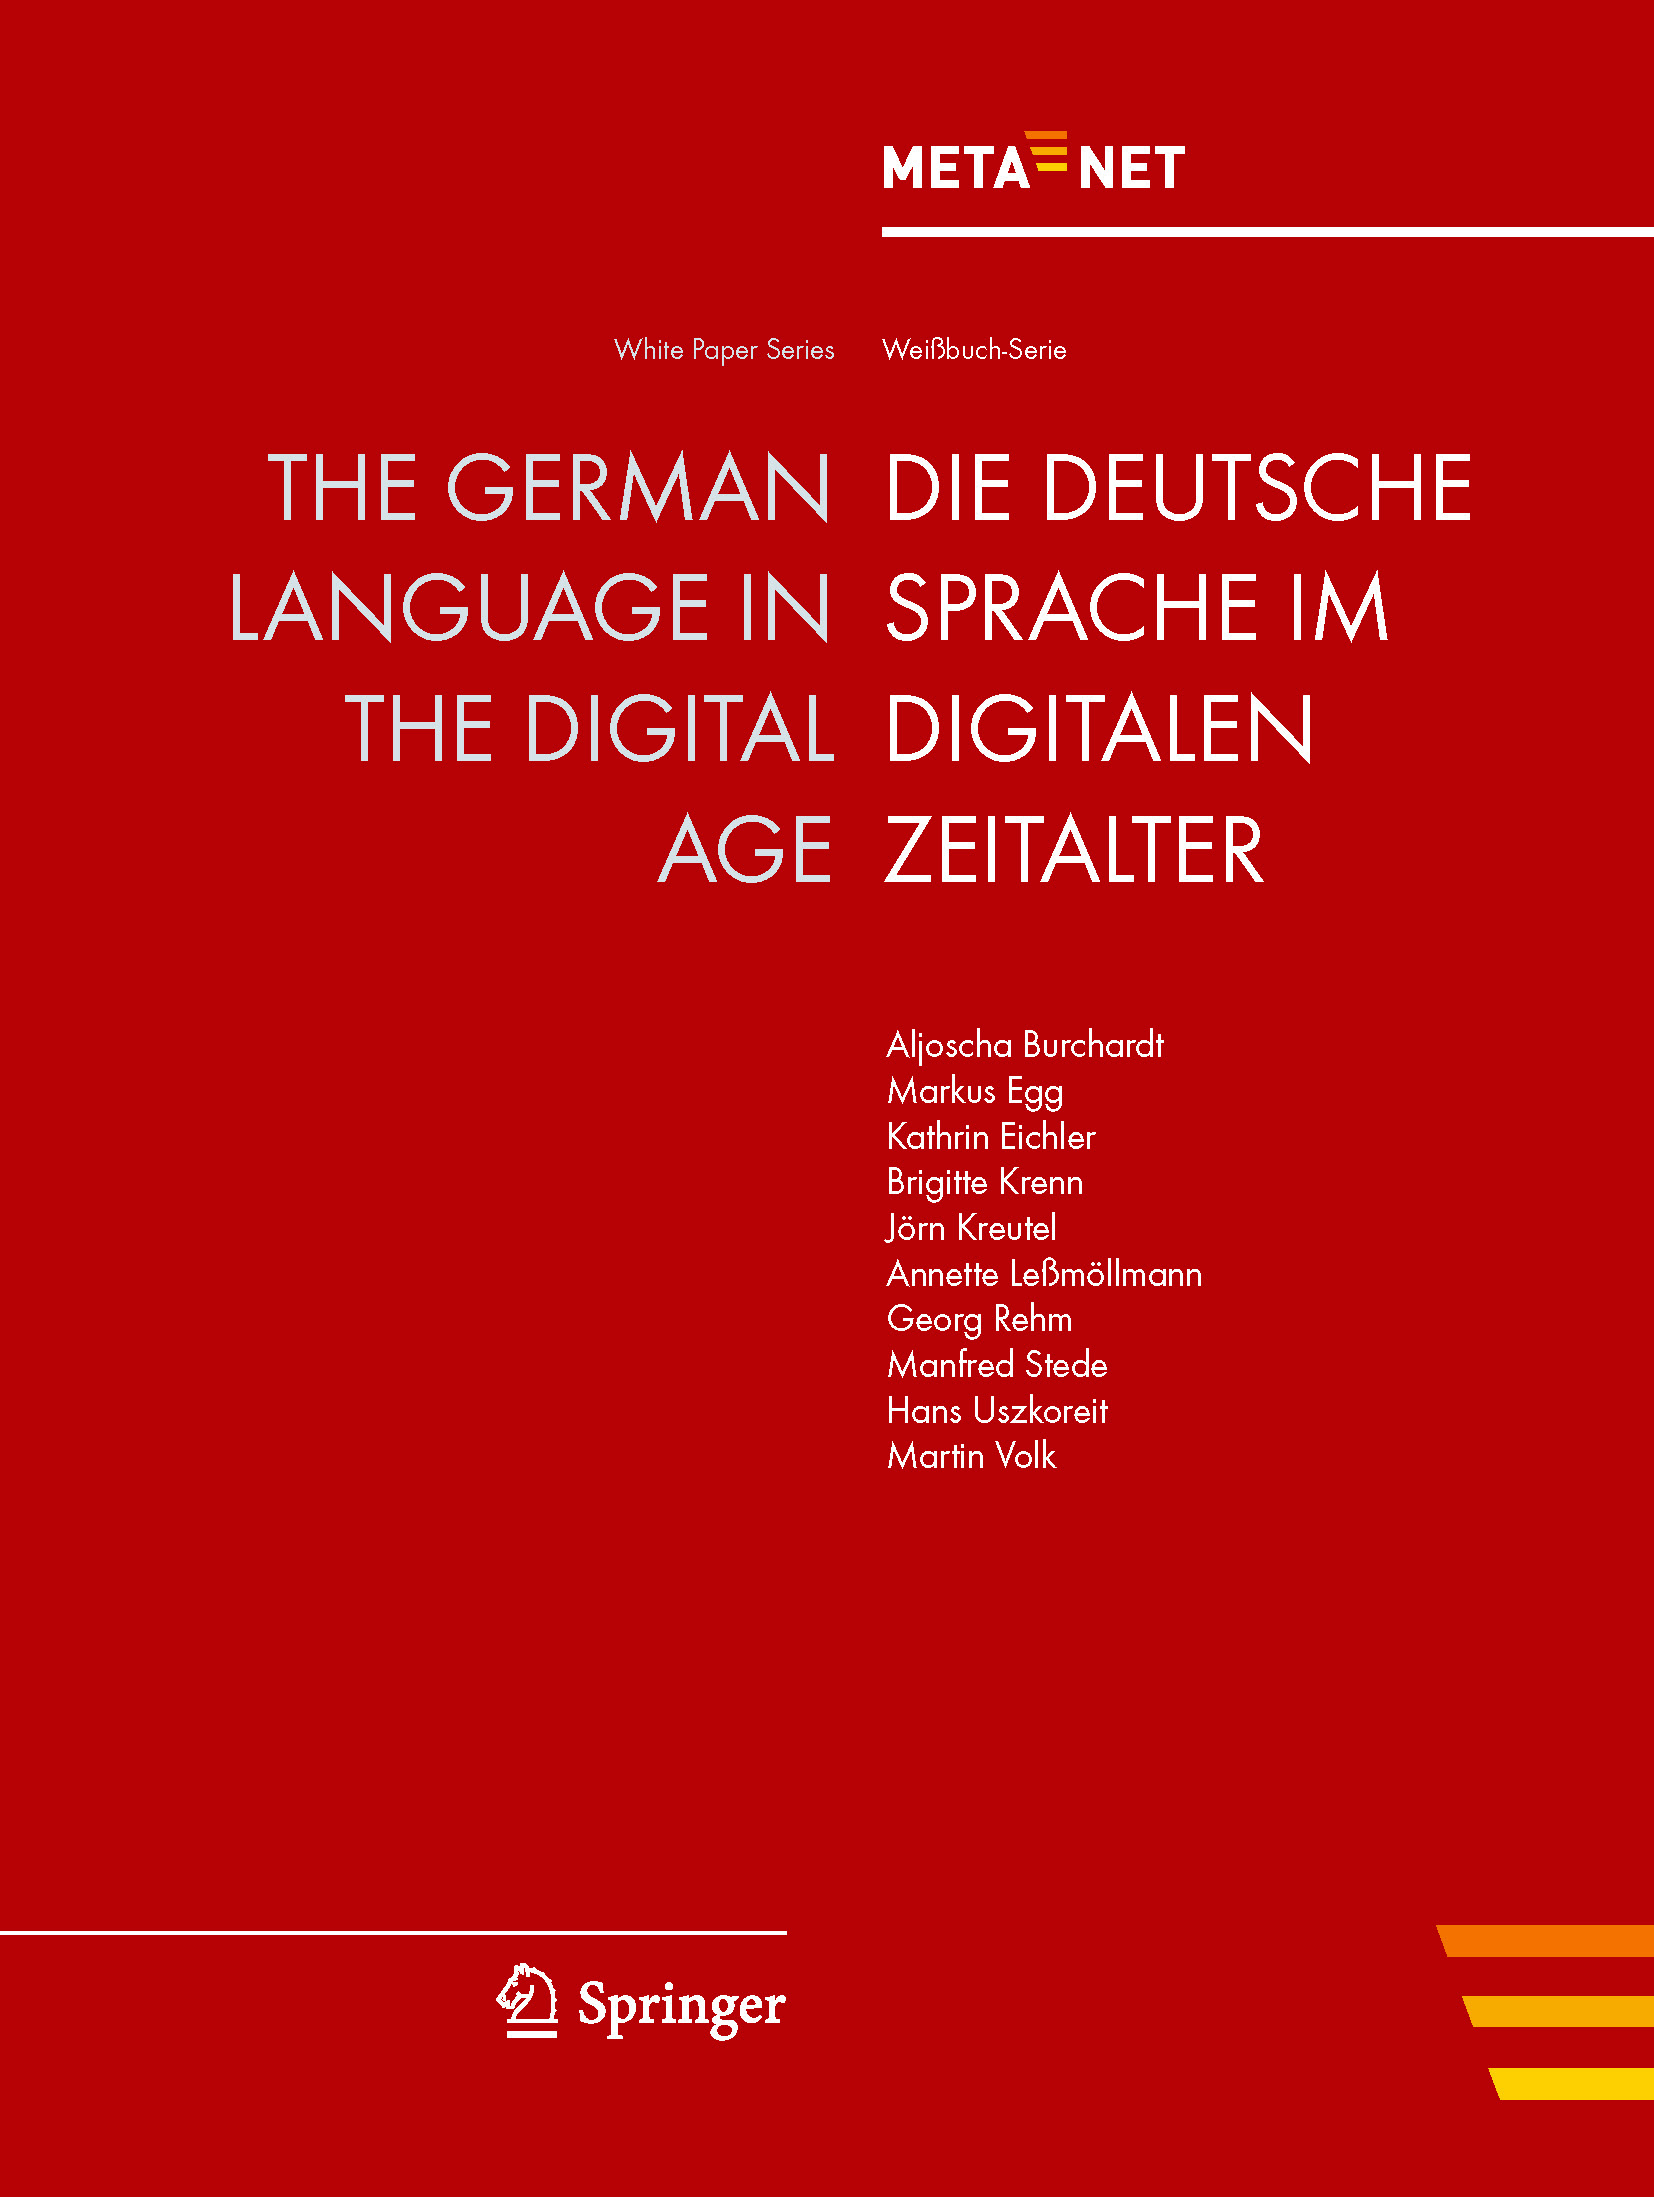 Cover of German Whitepaper